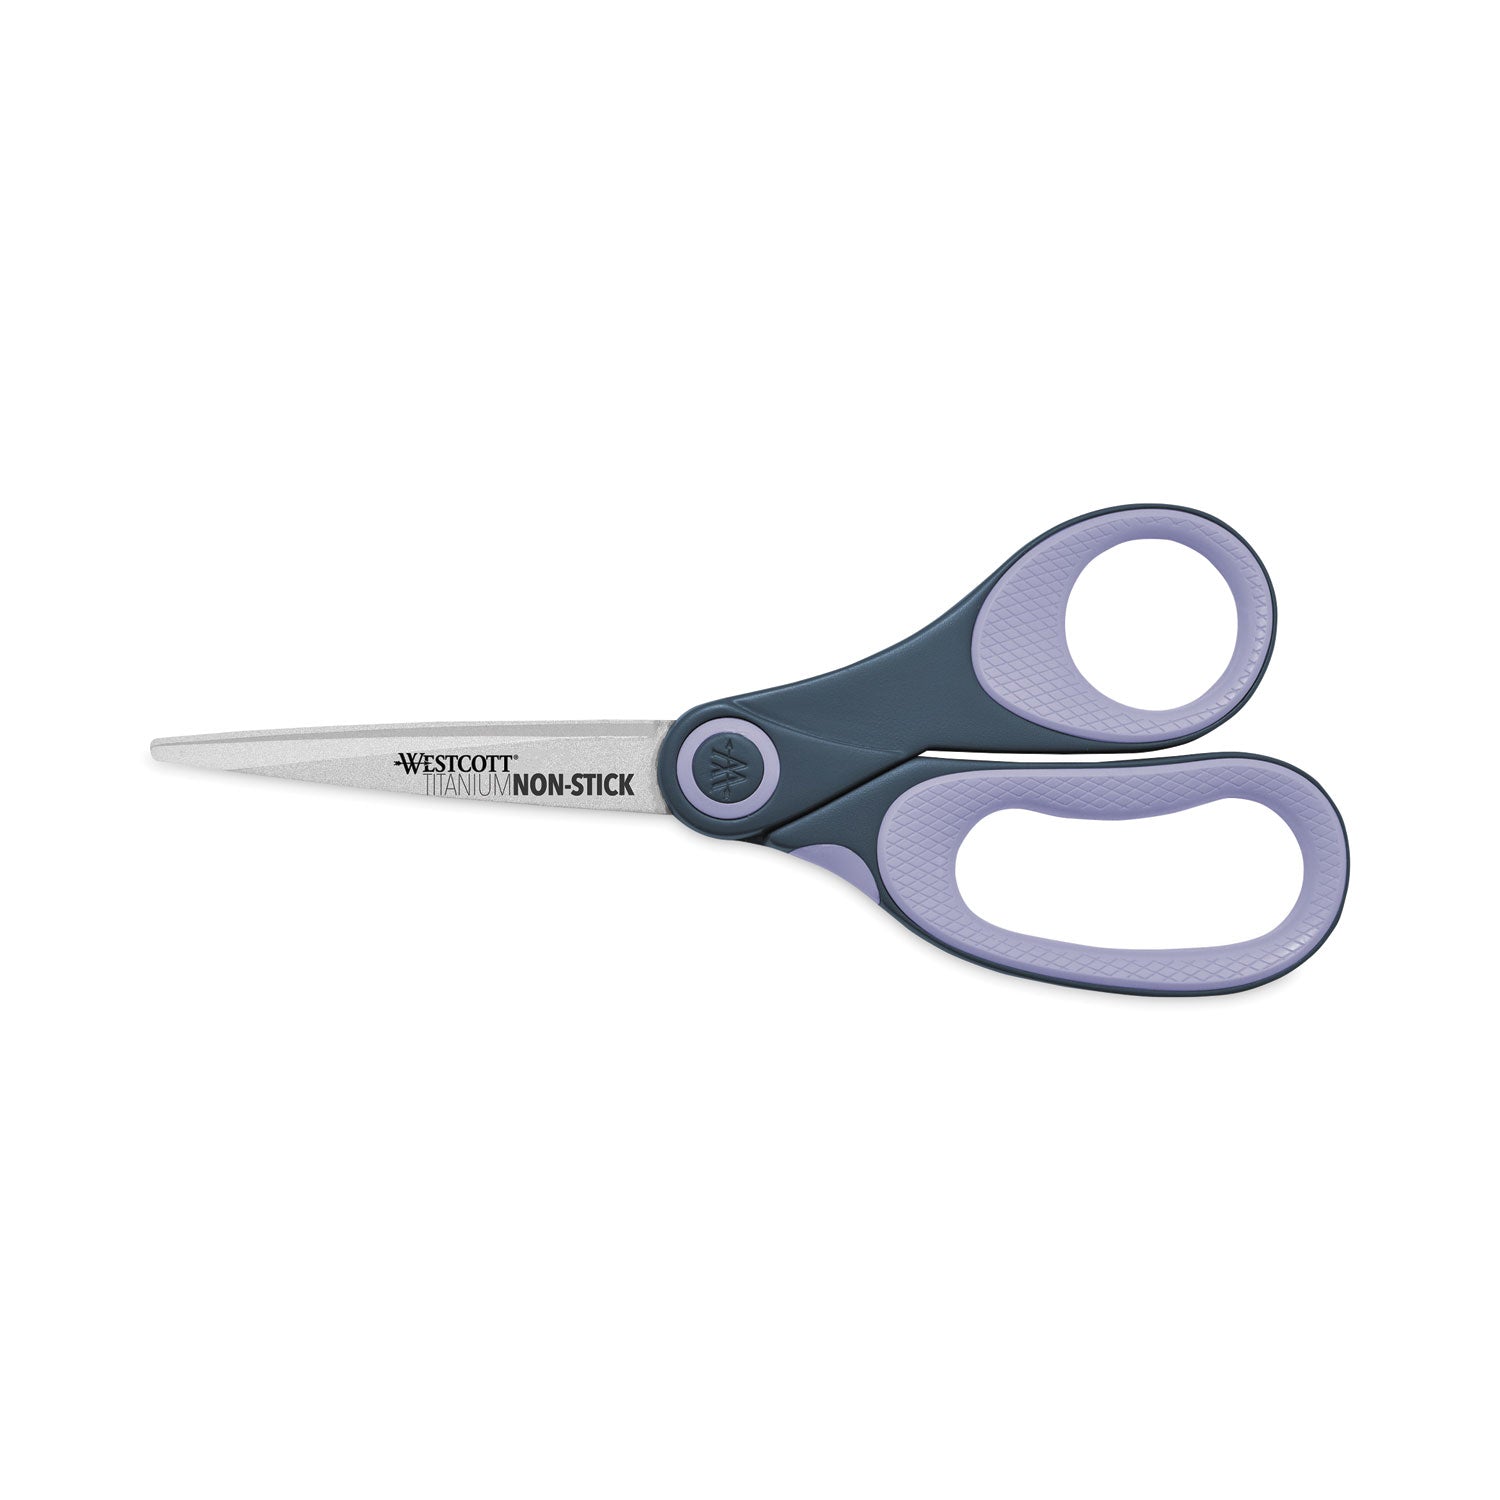 Non-Stick Titanium Bonded Scissors, 8" Long, 3.25" Cut Length, Gray/Purple Straight Handle - 